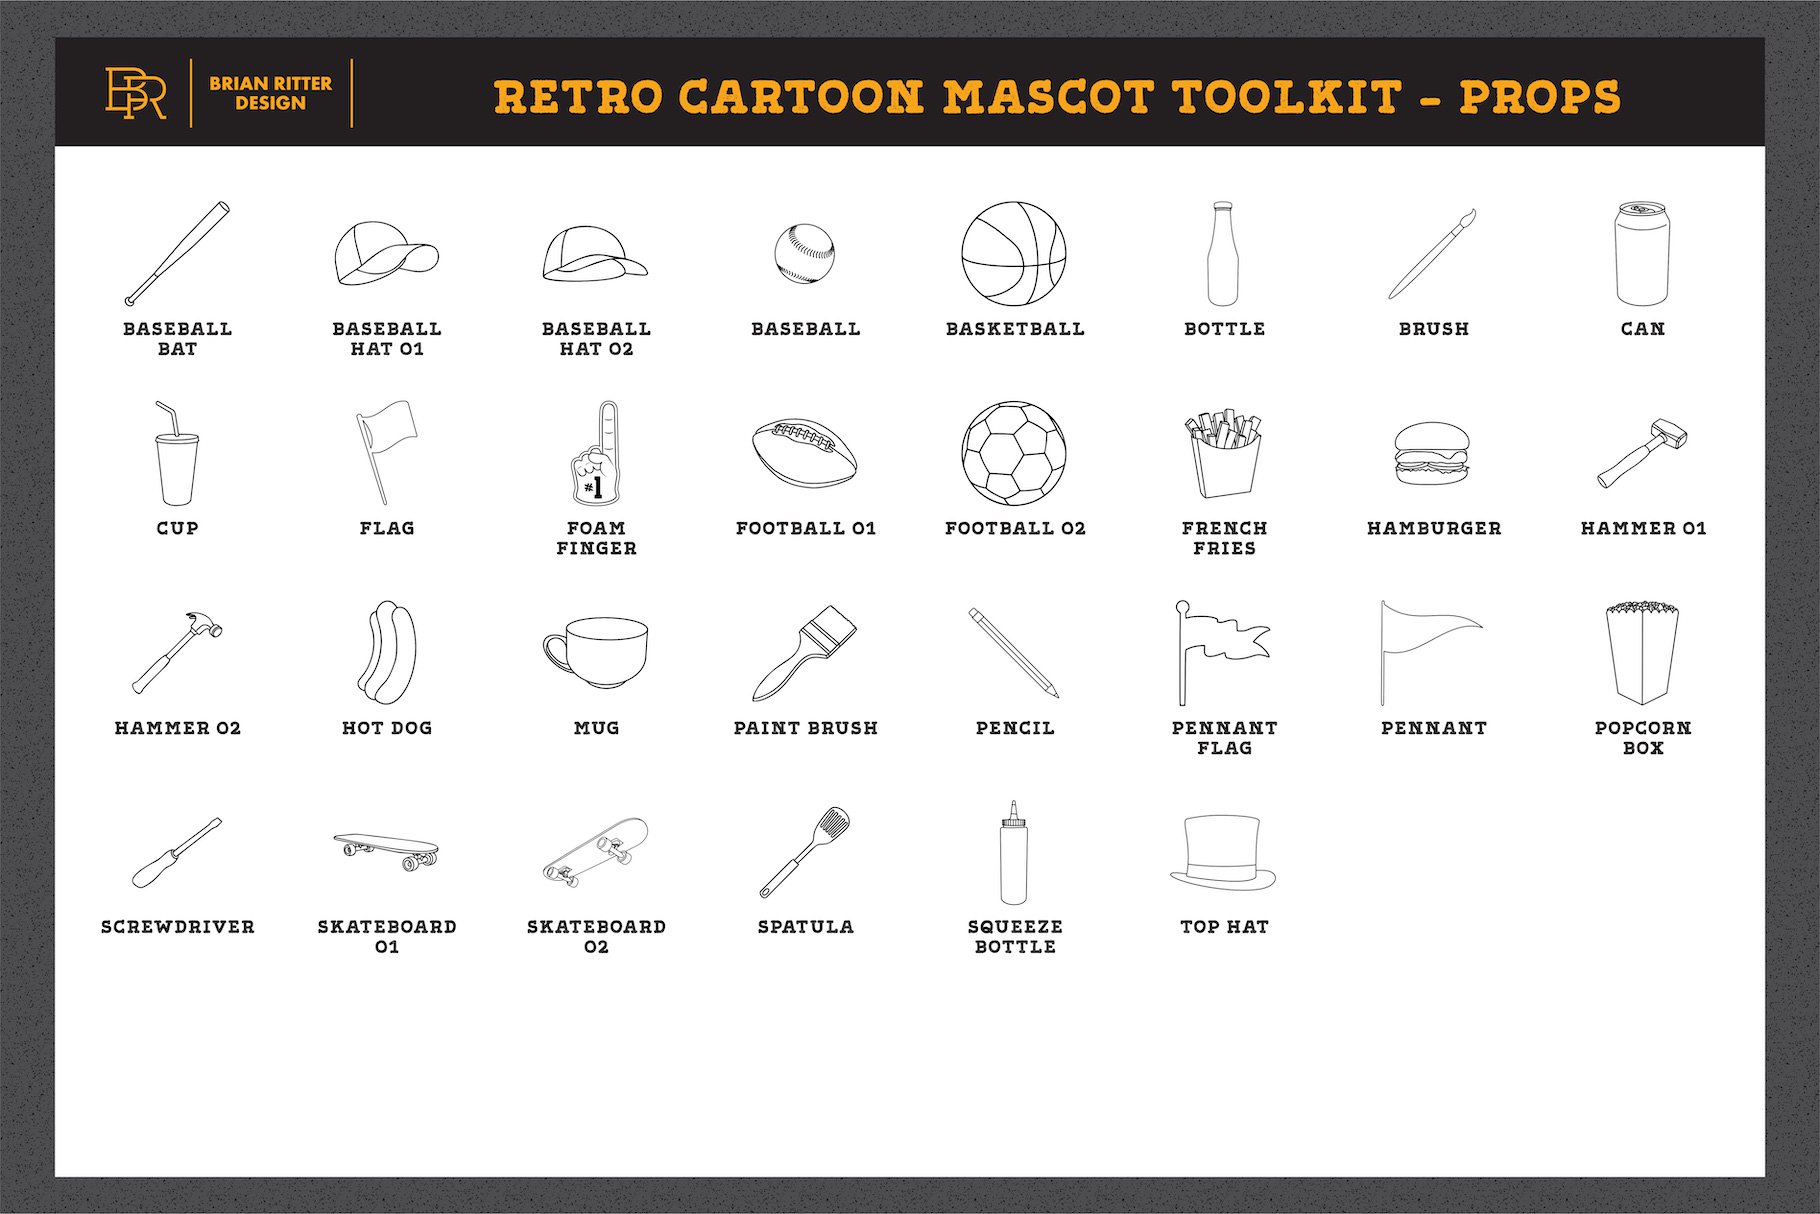 Retro cartoon mascot toolkit - props.